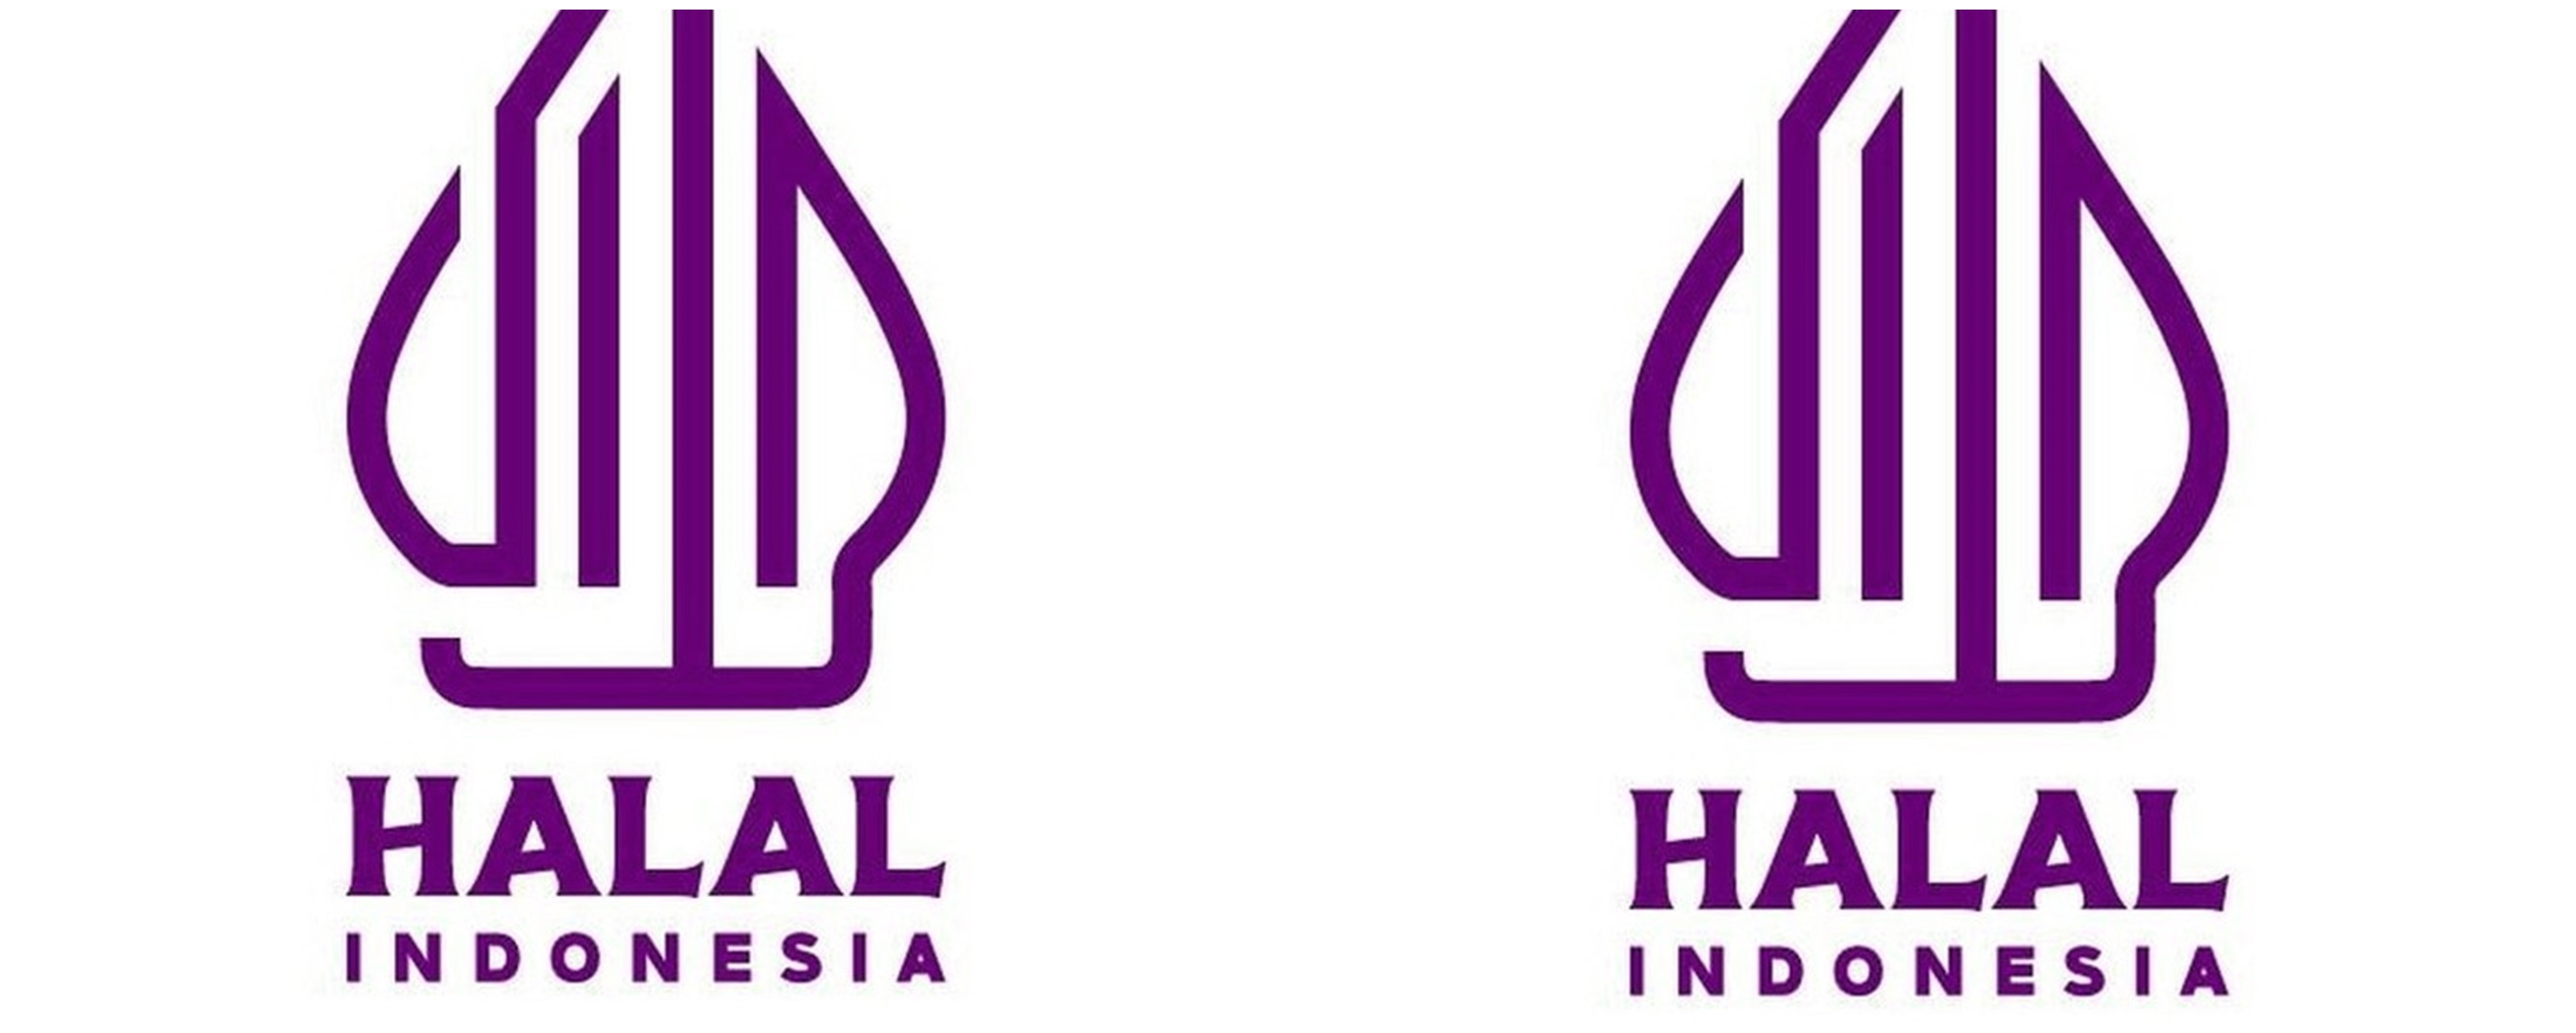 Kemenag rilis logo halal baru motif Surjan, ini makna dan filosofinya